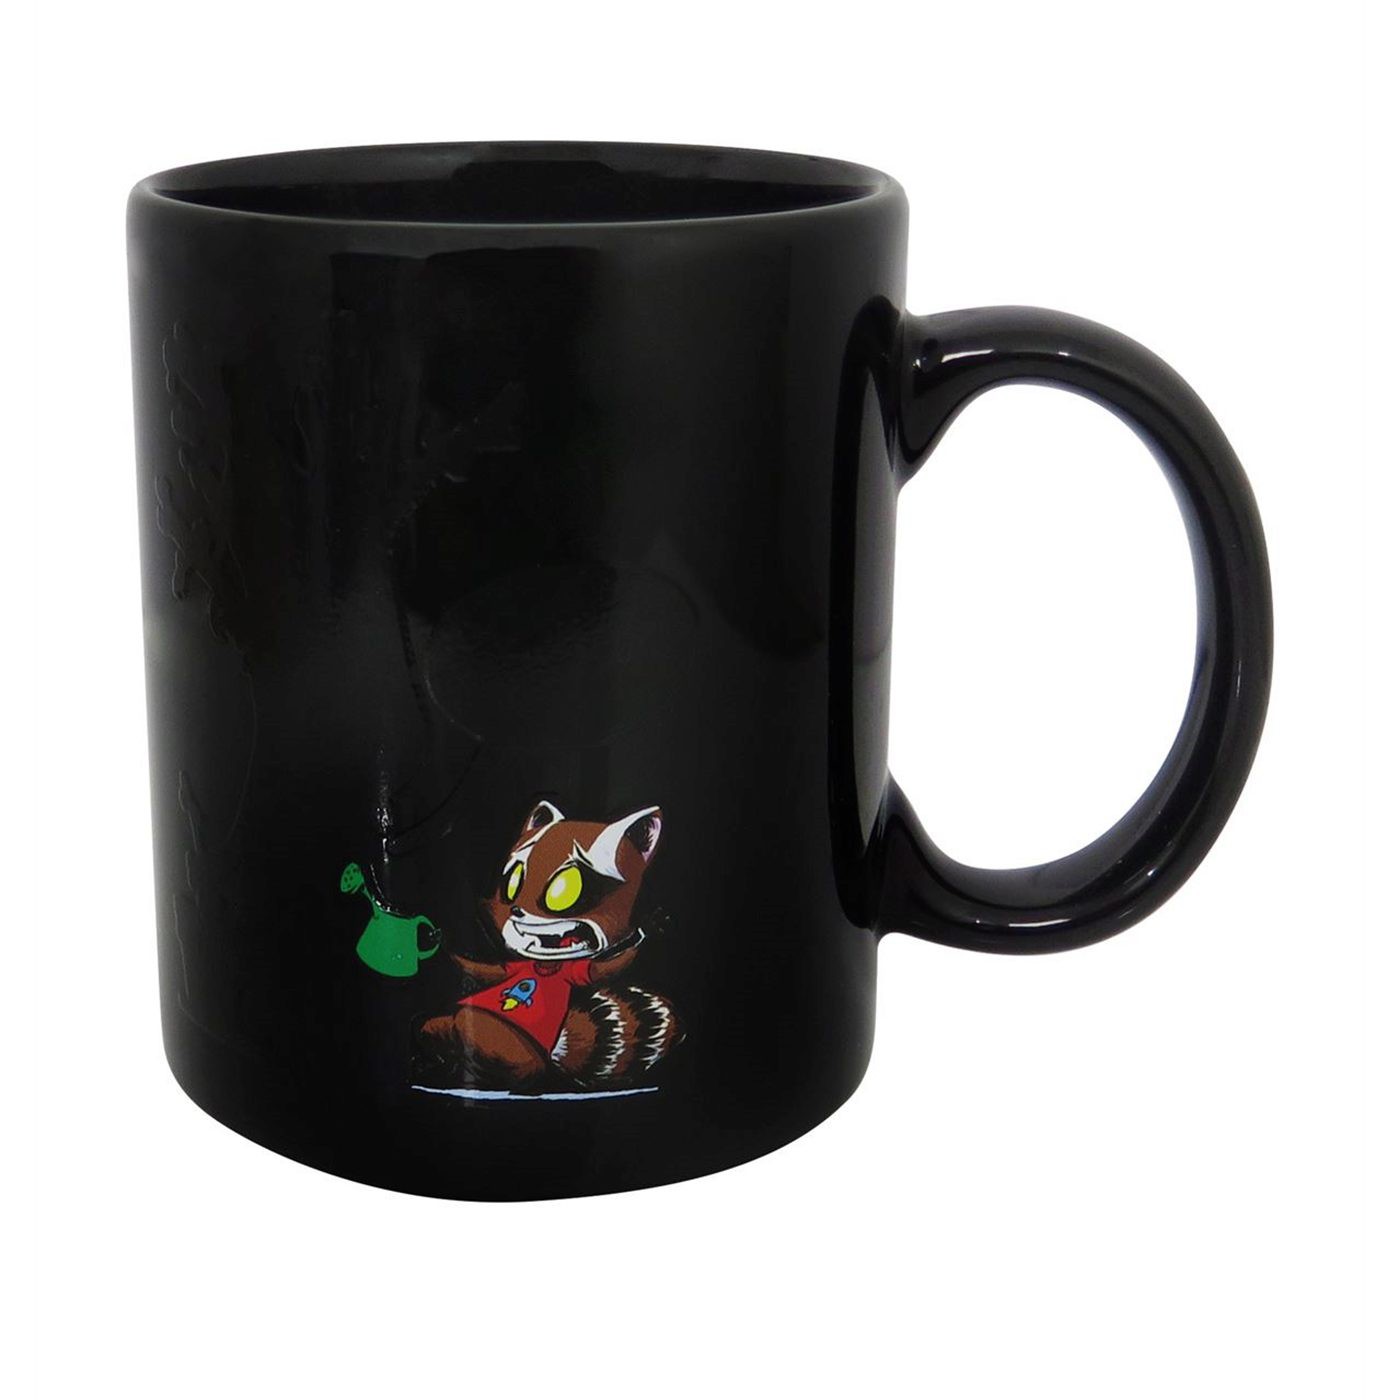 GOTG Rocket Raccoon and Groot Heat Changing Mug